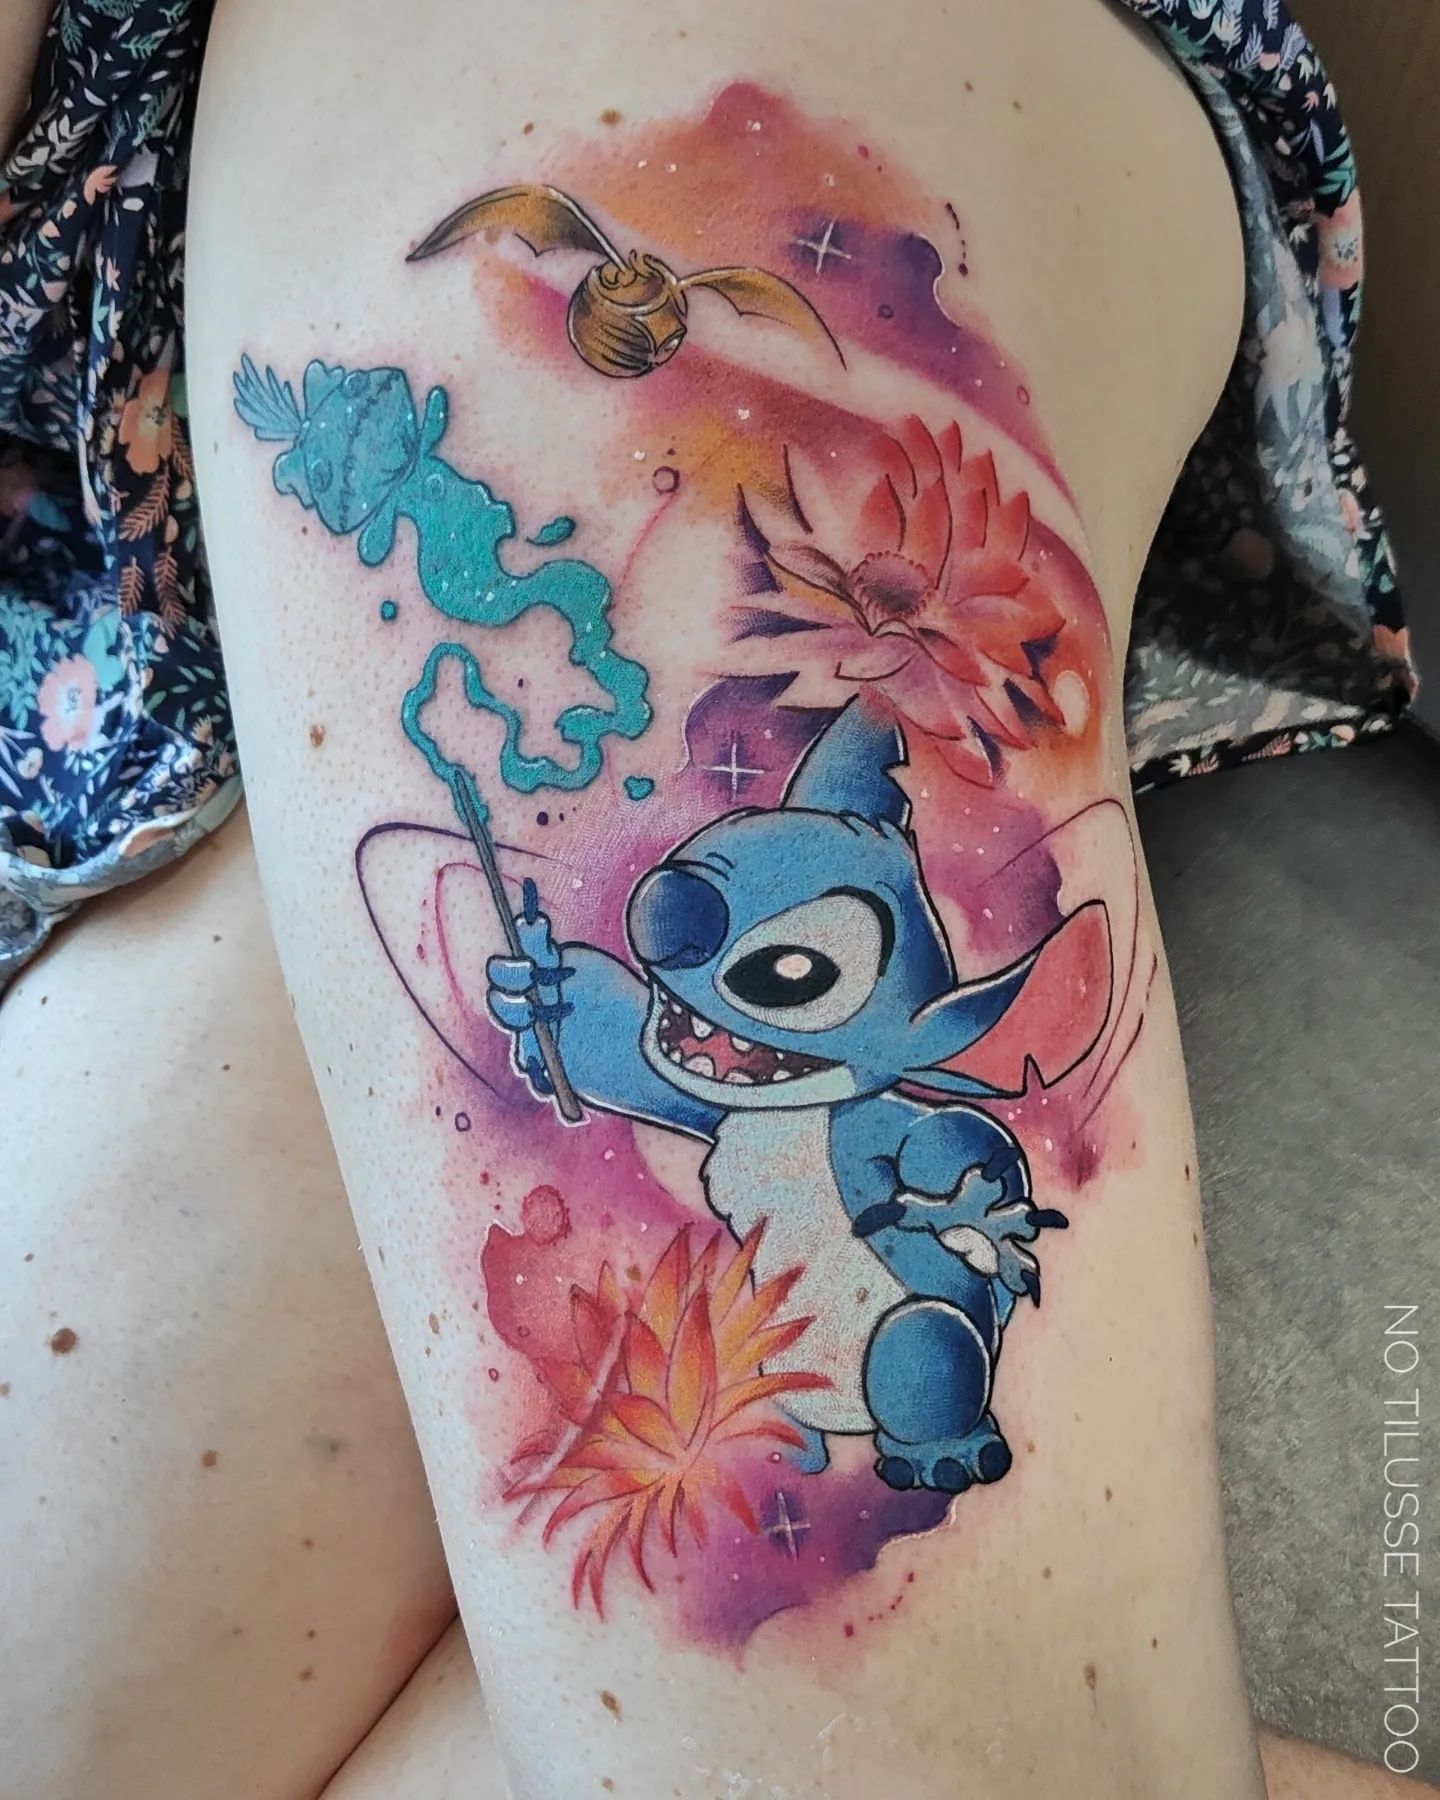 My Stitch Tattoo by sonic626 on DeviantArt